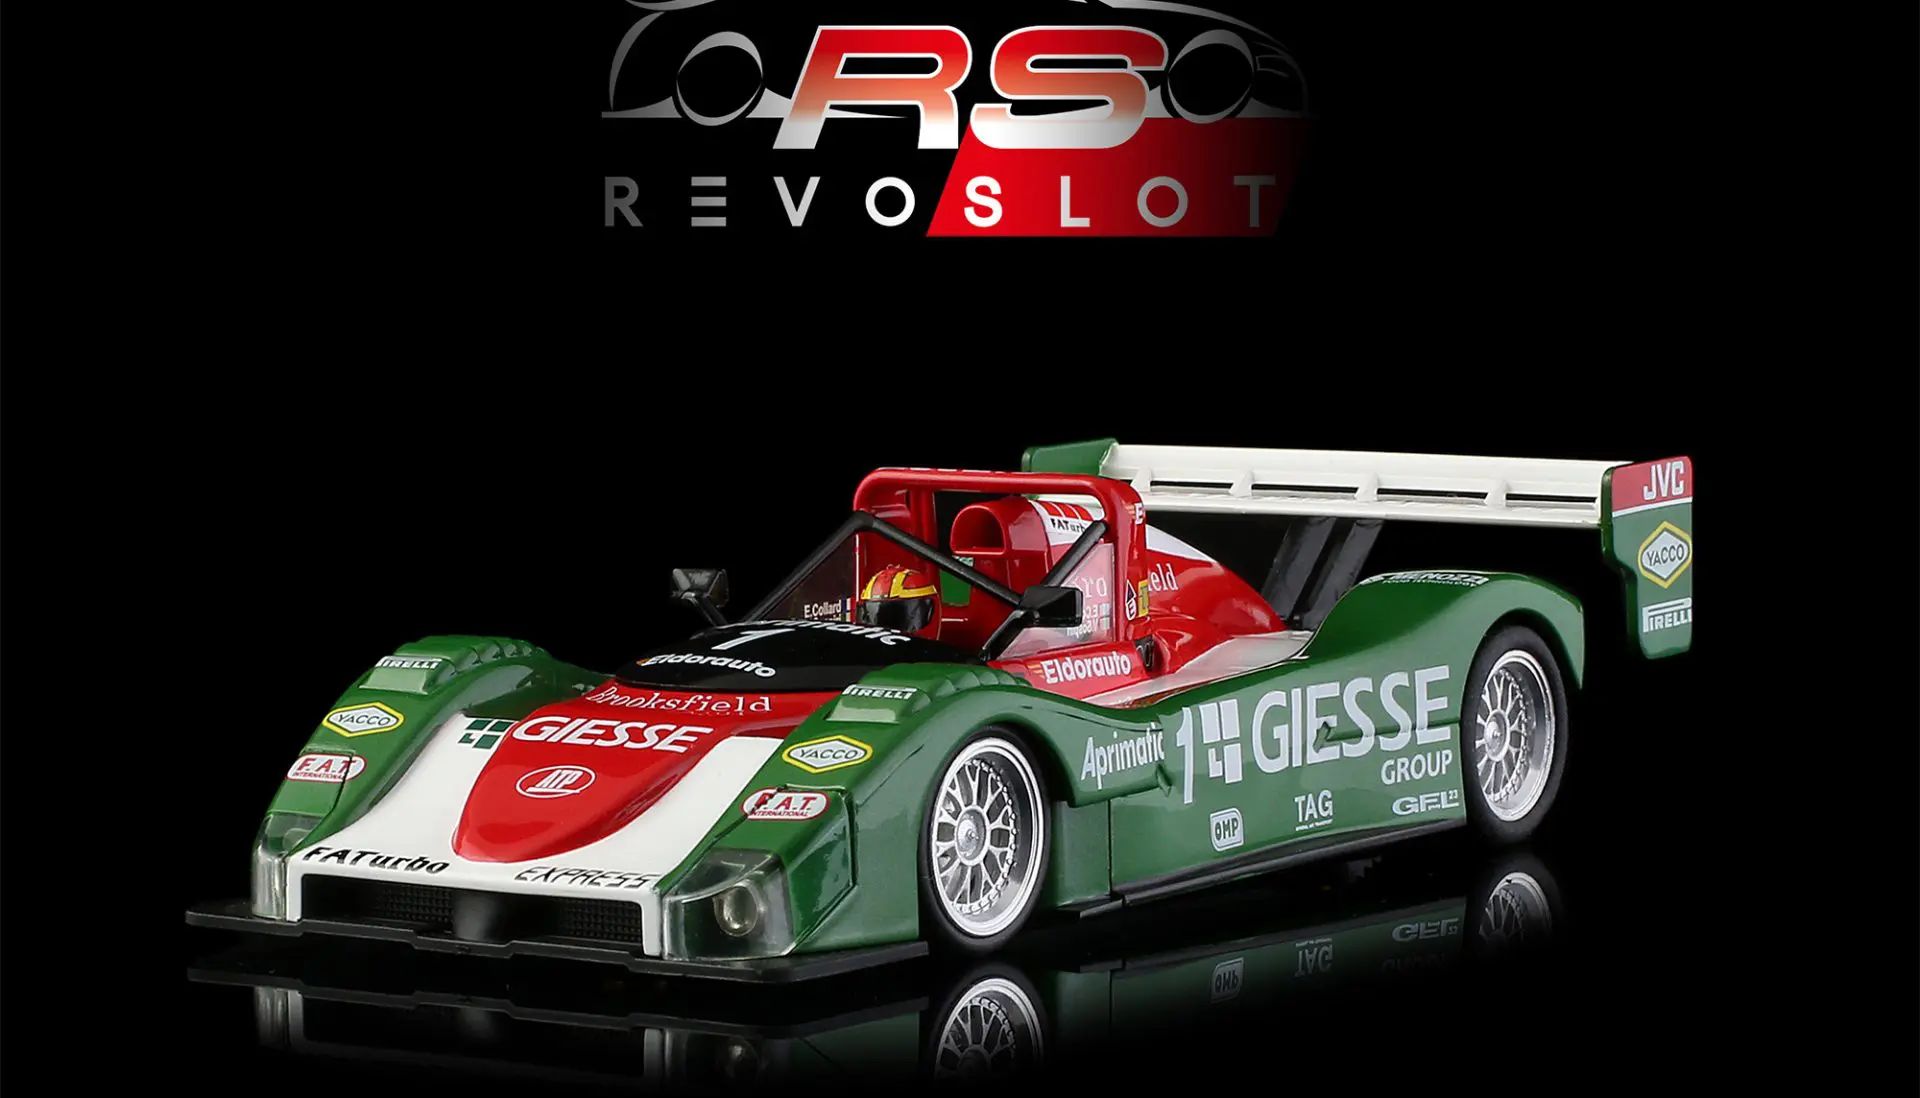 Revoslot - RS0181 Ferrari 333 SP #1 - Team JB Giesse - 3rd DMC/ADAC Sportwagen-Festival Nurburgring 1998